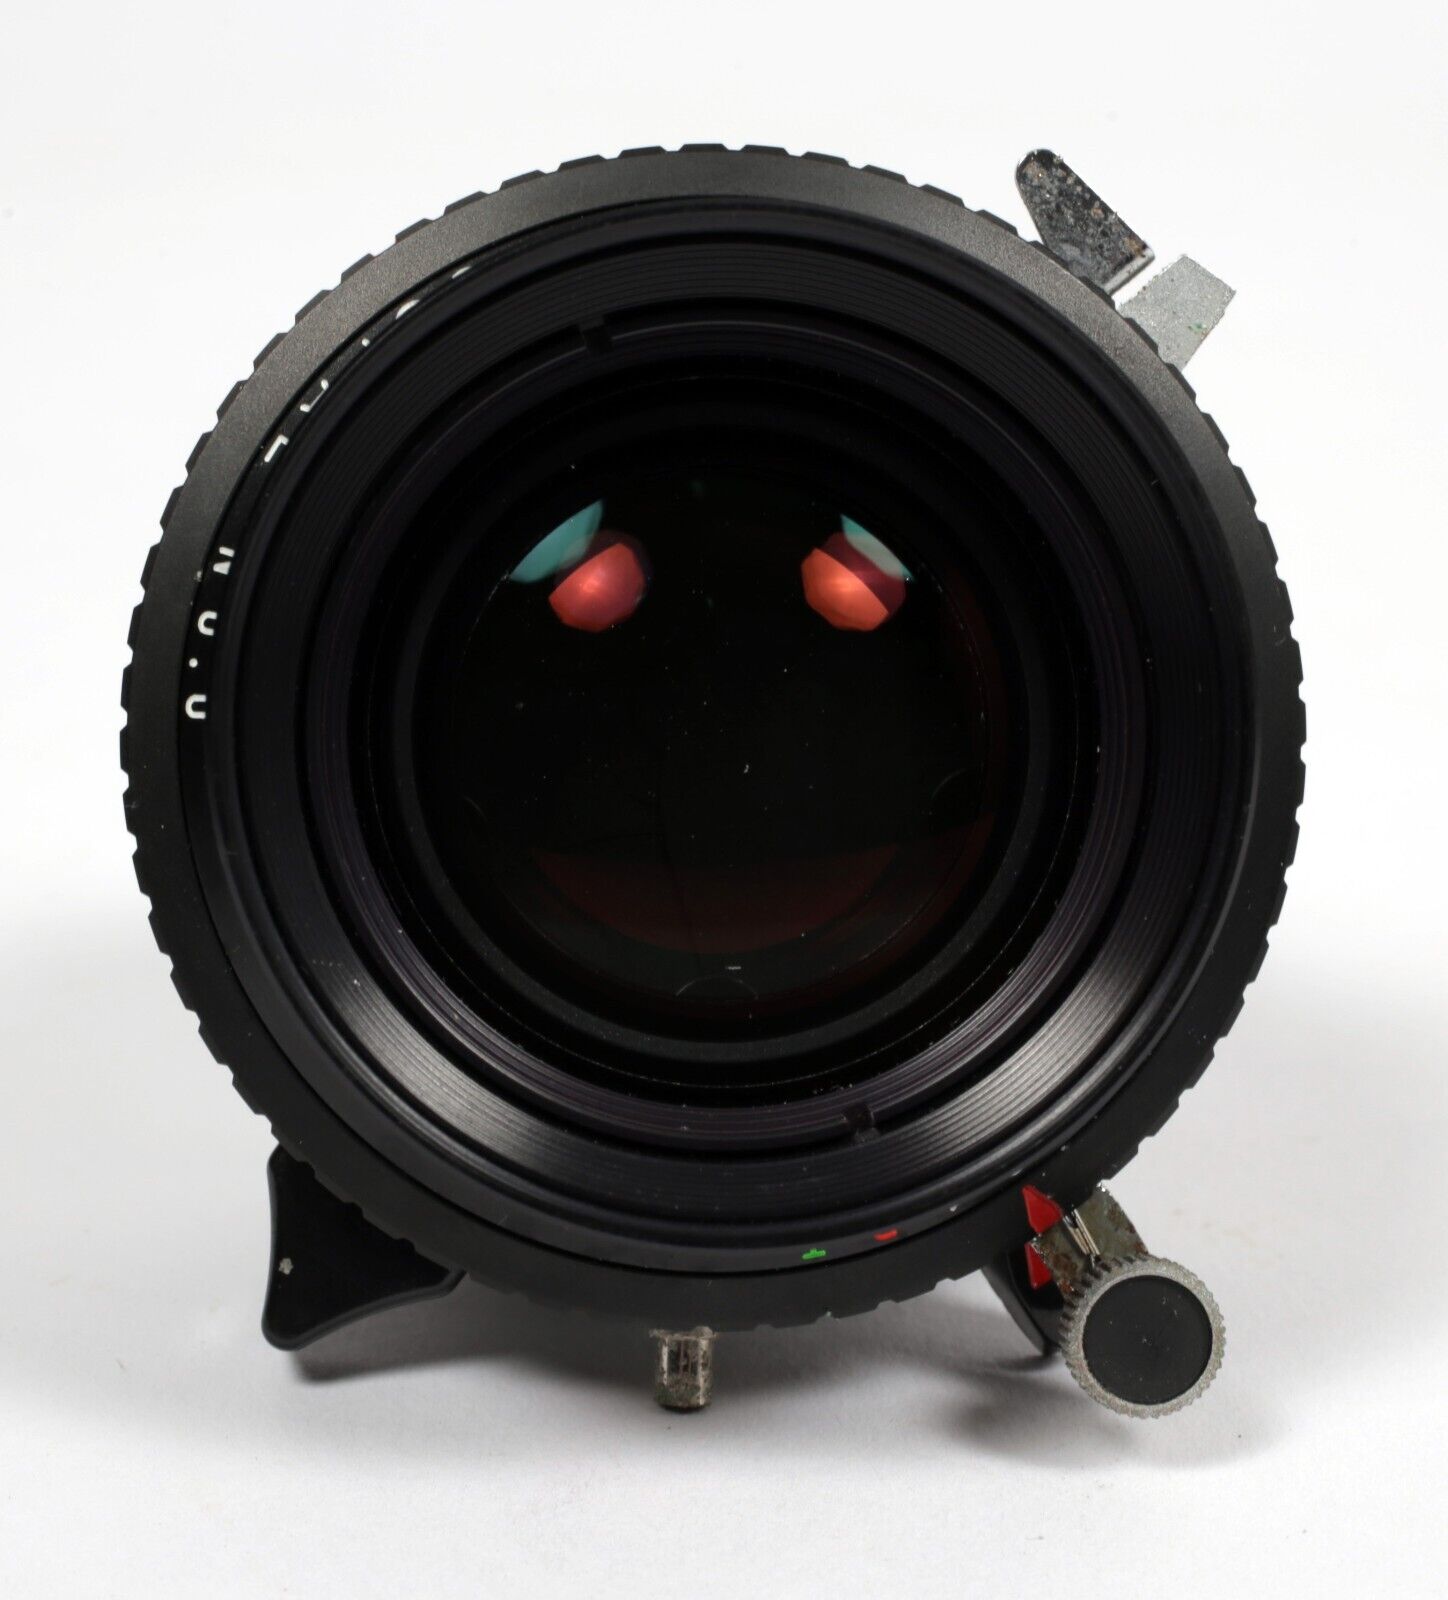 Rodenstock Apo-Sironar-S 150mm F5.6 Lens in Copal #0 Shutter #8952 | CatLABS